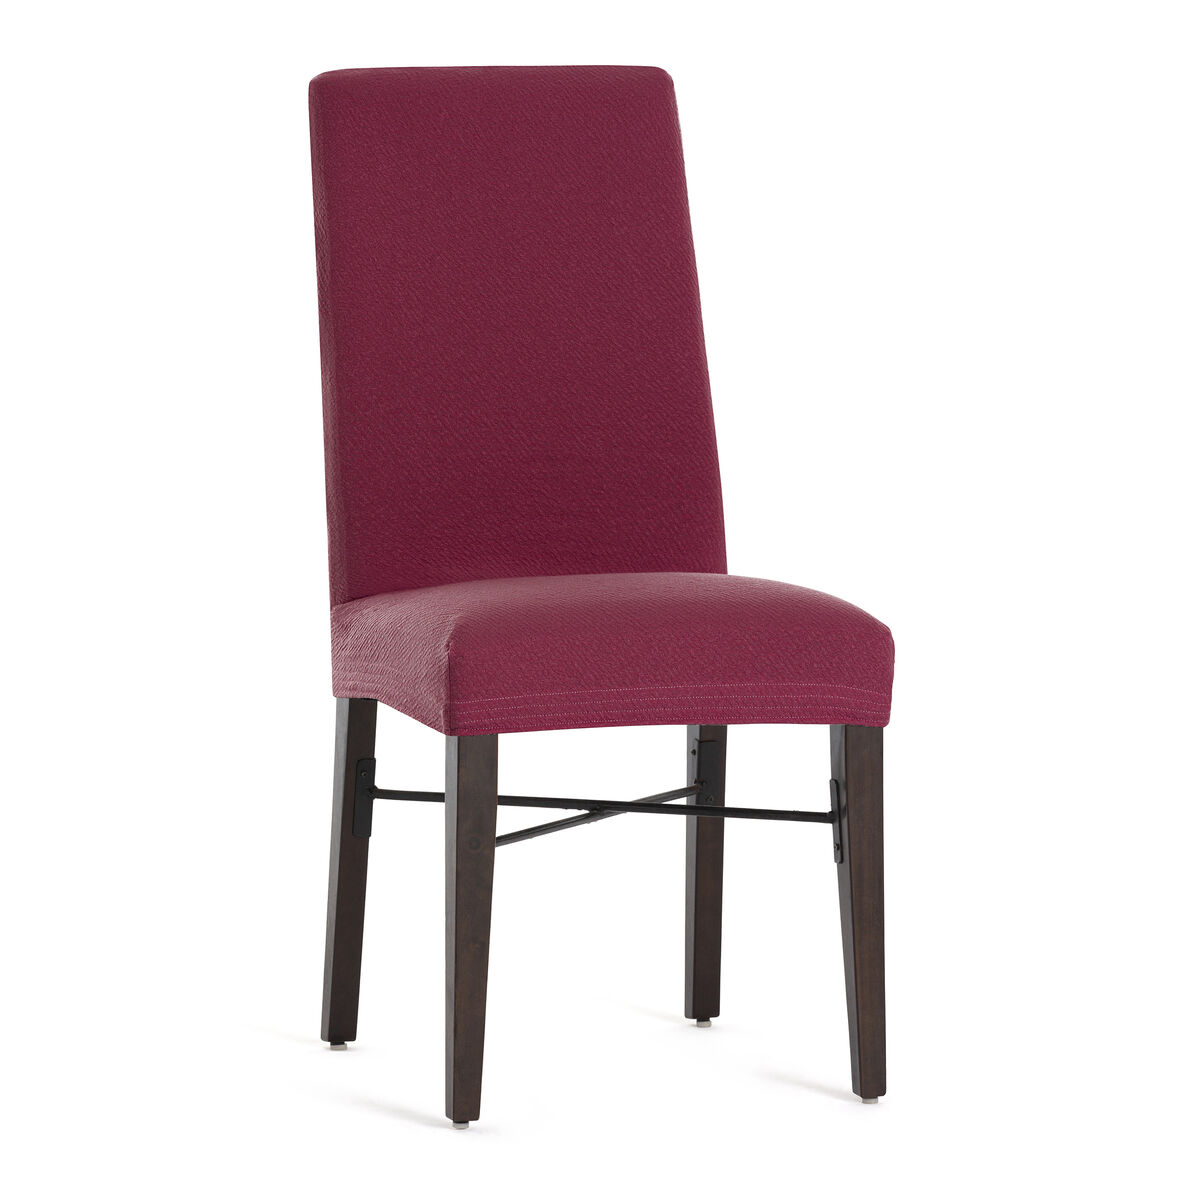 Chair Cover Eysa BRONX Burgundy 50 x 55 x 50 cm 2 Units